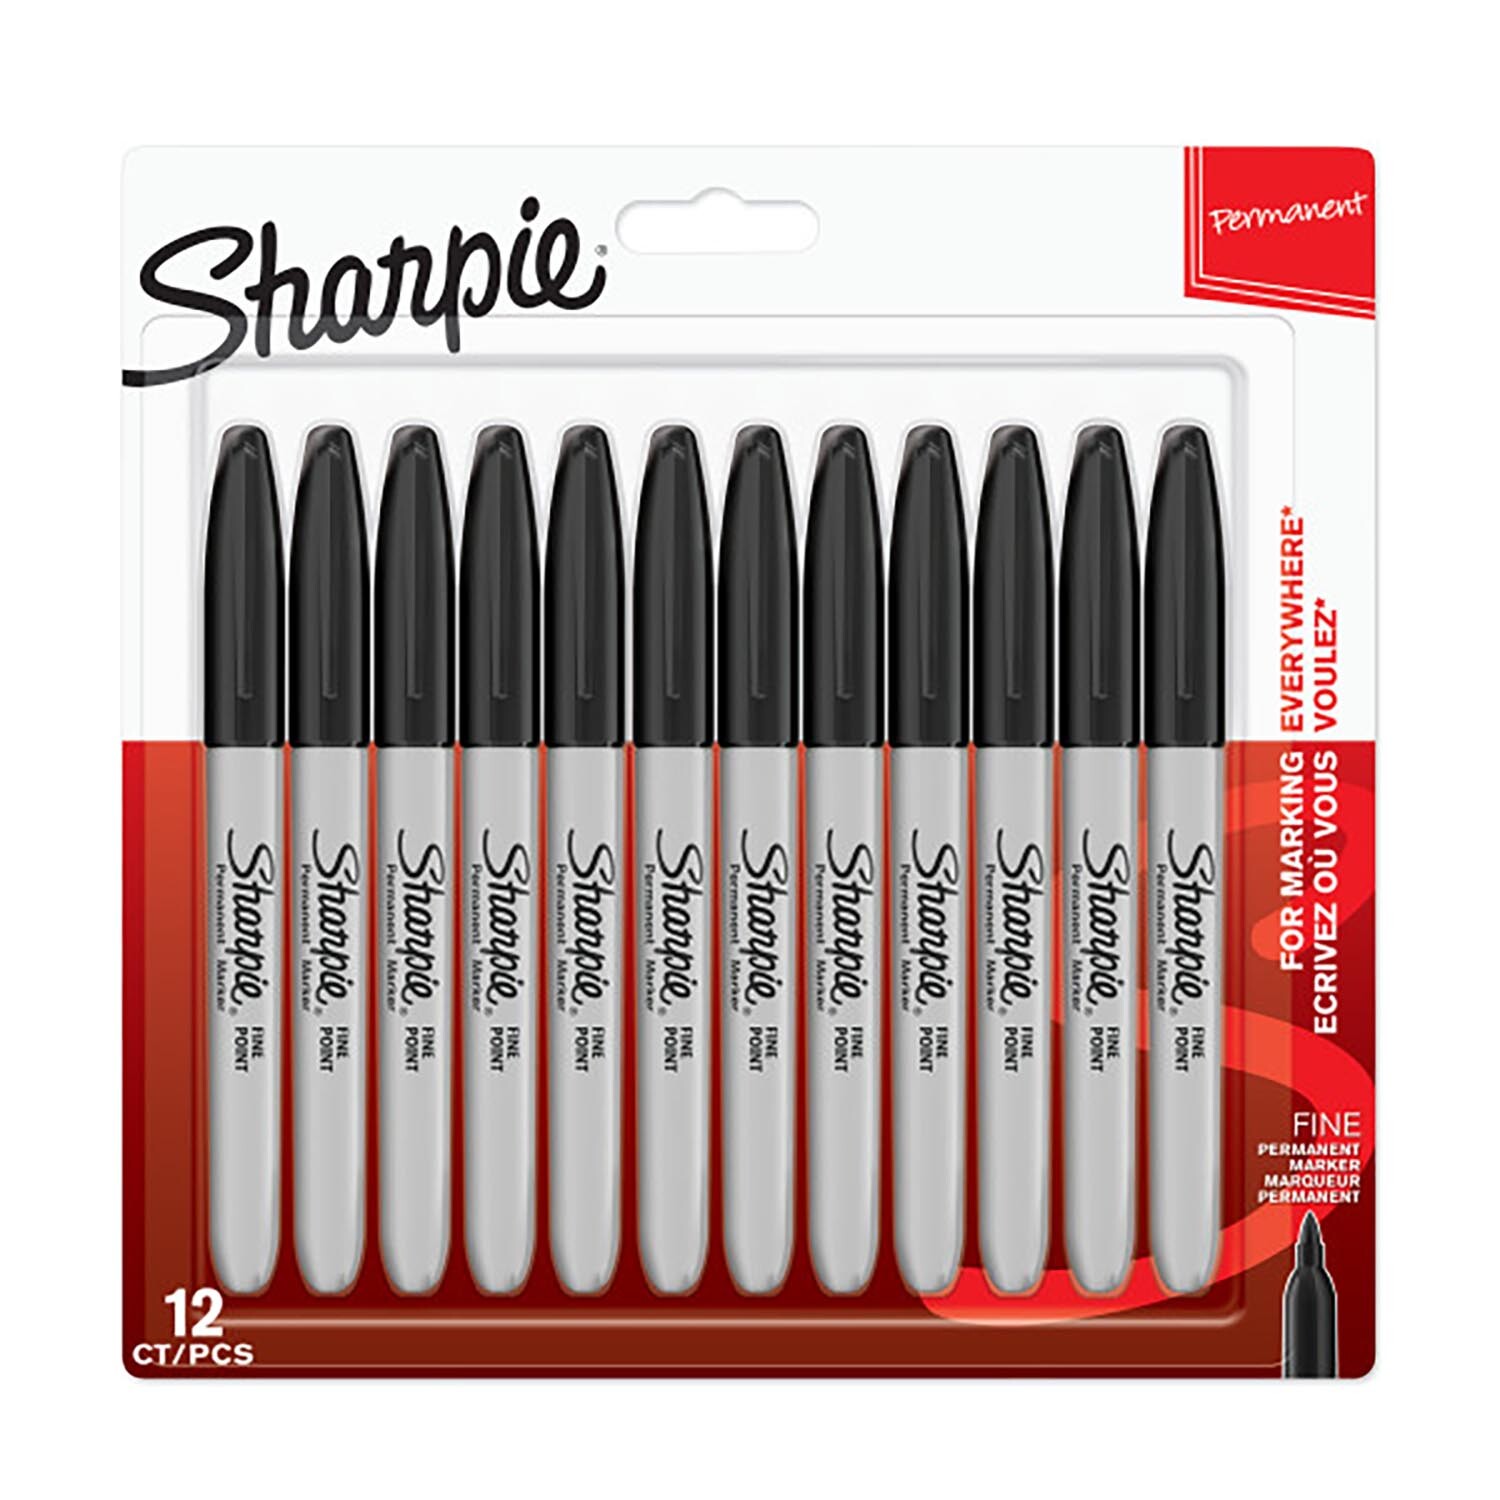 Sharpie Black Permanent Marker Pen 12 Pack Image